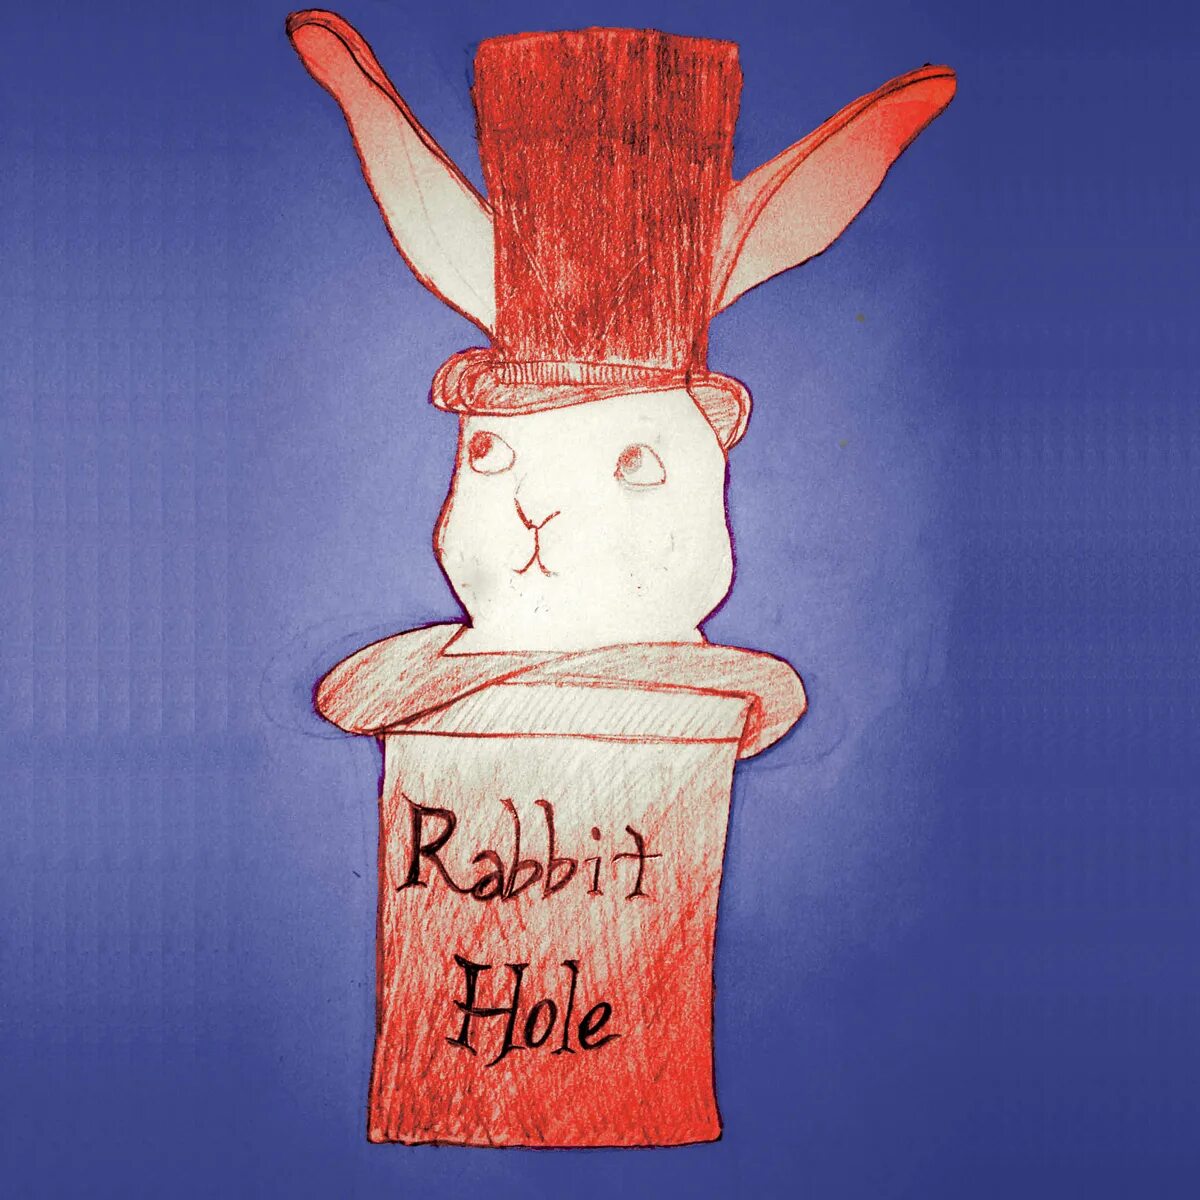 Rabbit hole. The Rabbit hole картинки. Кролик и дыра. Аватарка Rabbit hole. Раббит холе